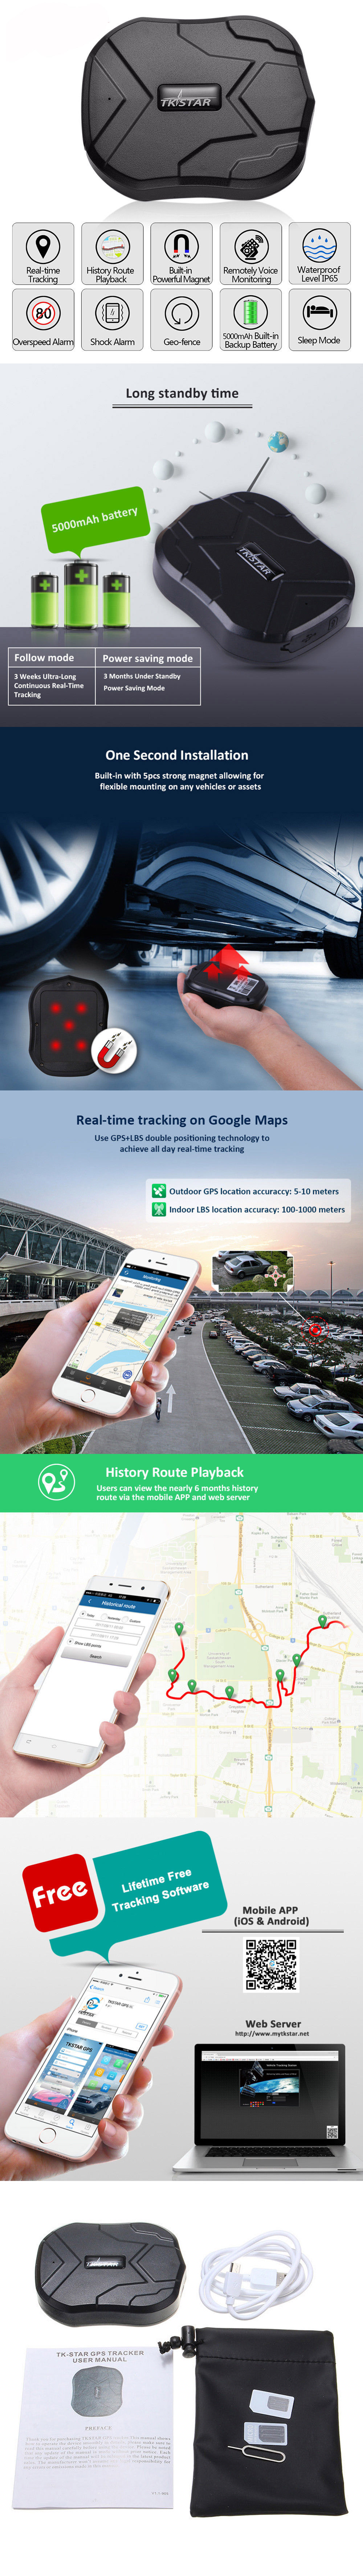 TKSTAR TK905 GPS Tracker 5000mAh 90 Days Standby 2G Vehicle Tracker GPS  Locator Waterproof Magnet Voice Monitor Sale - Banggood USA Mobile-arrival  notice